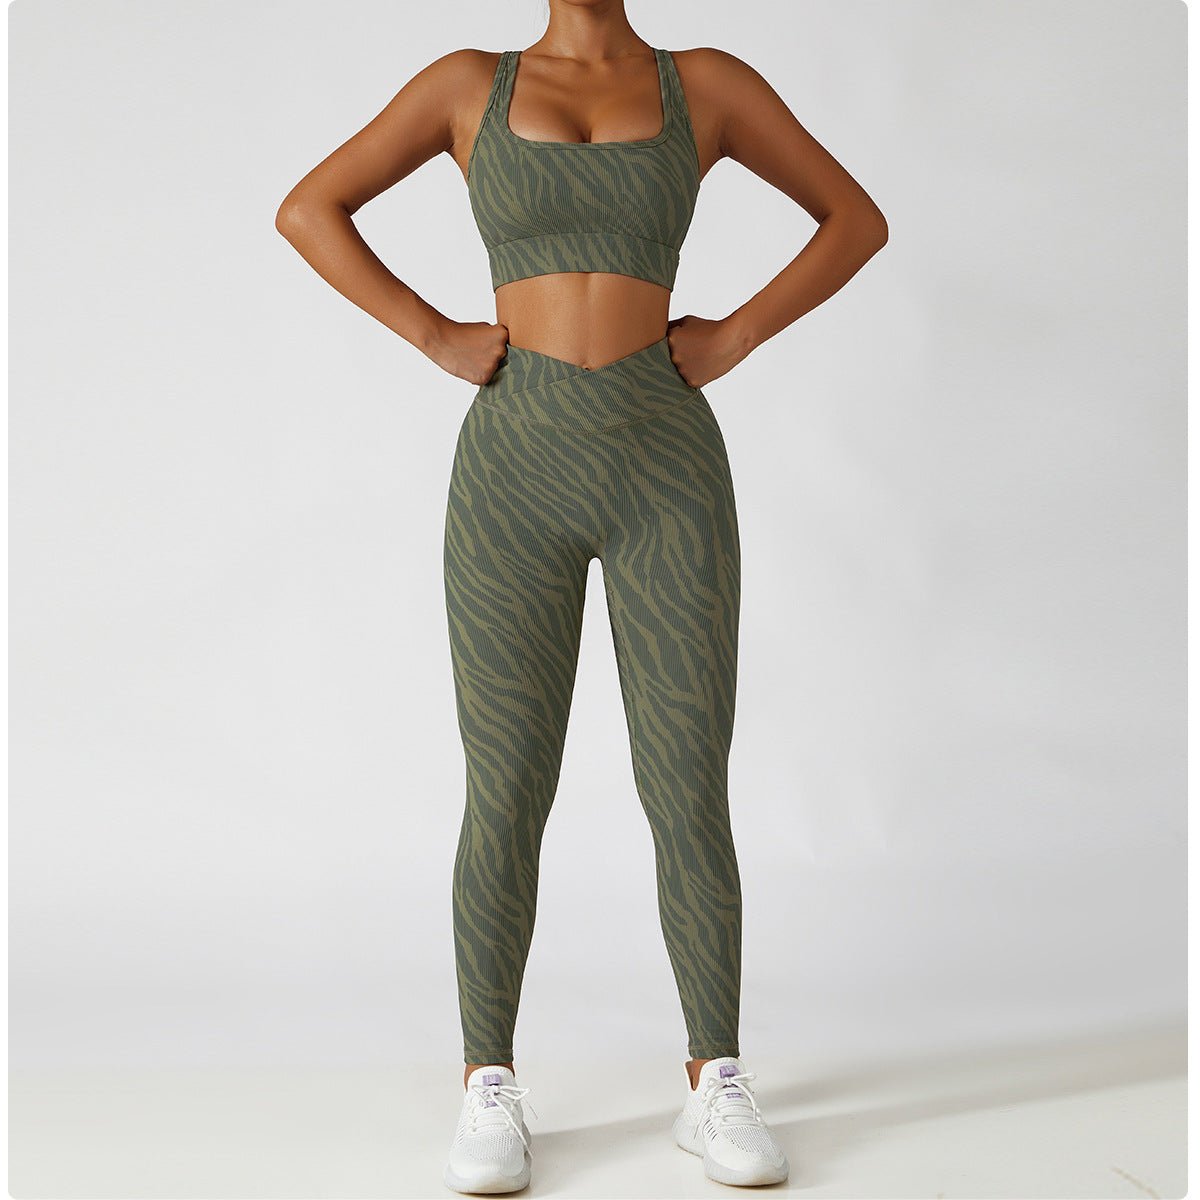 Fashion Fitness Print Womens 2 Piece Sets Tank Top & Pants Sport Yoga Wholesale Womens Activewear